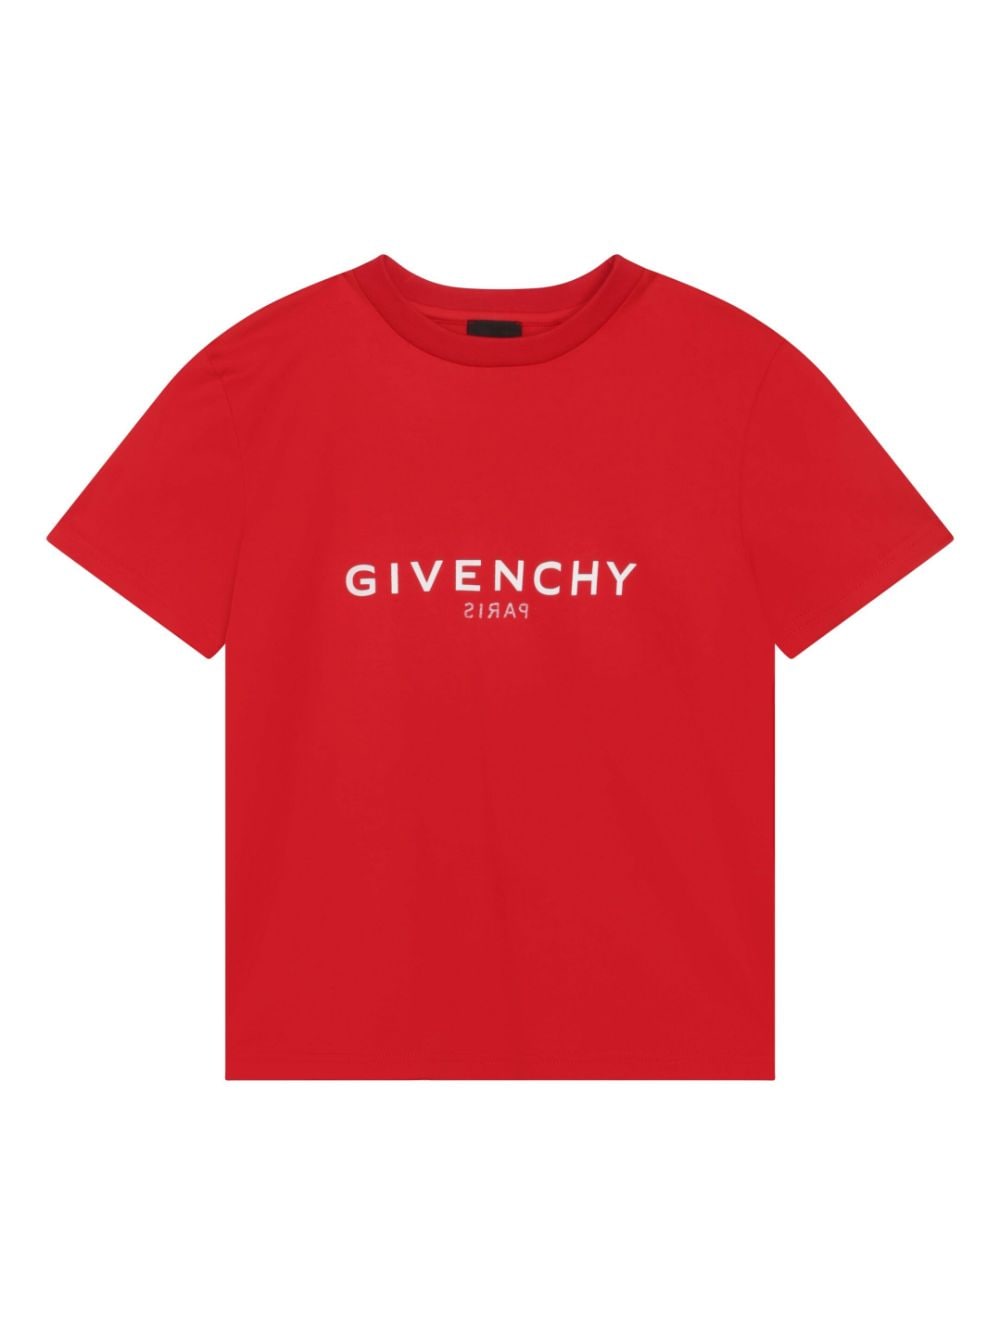 Red cotton jersey boy GIVENCHY t-shirt | Carofiglio Junior